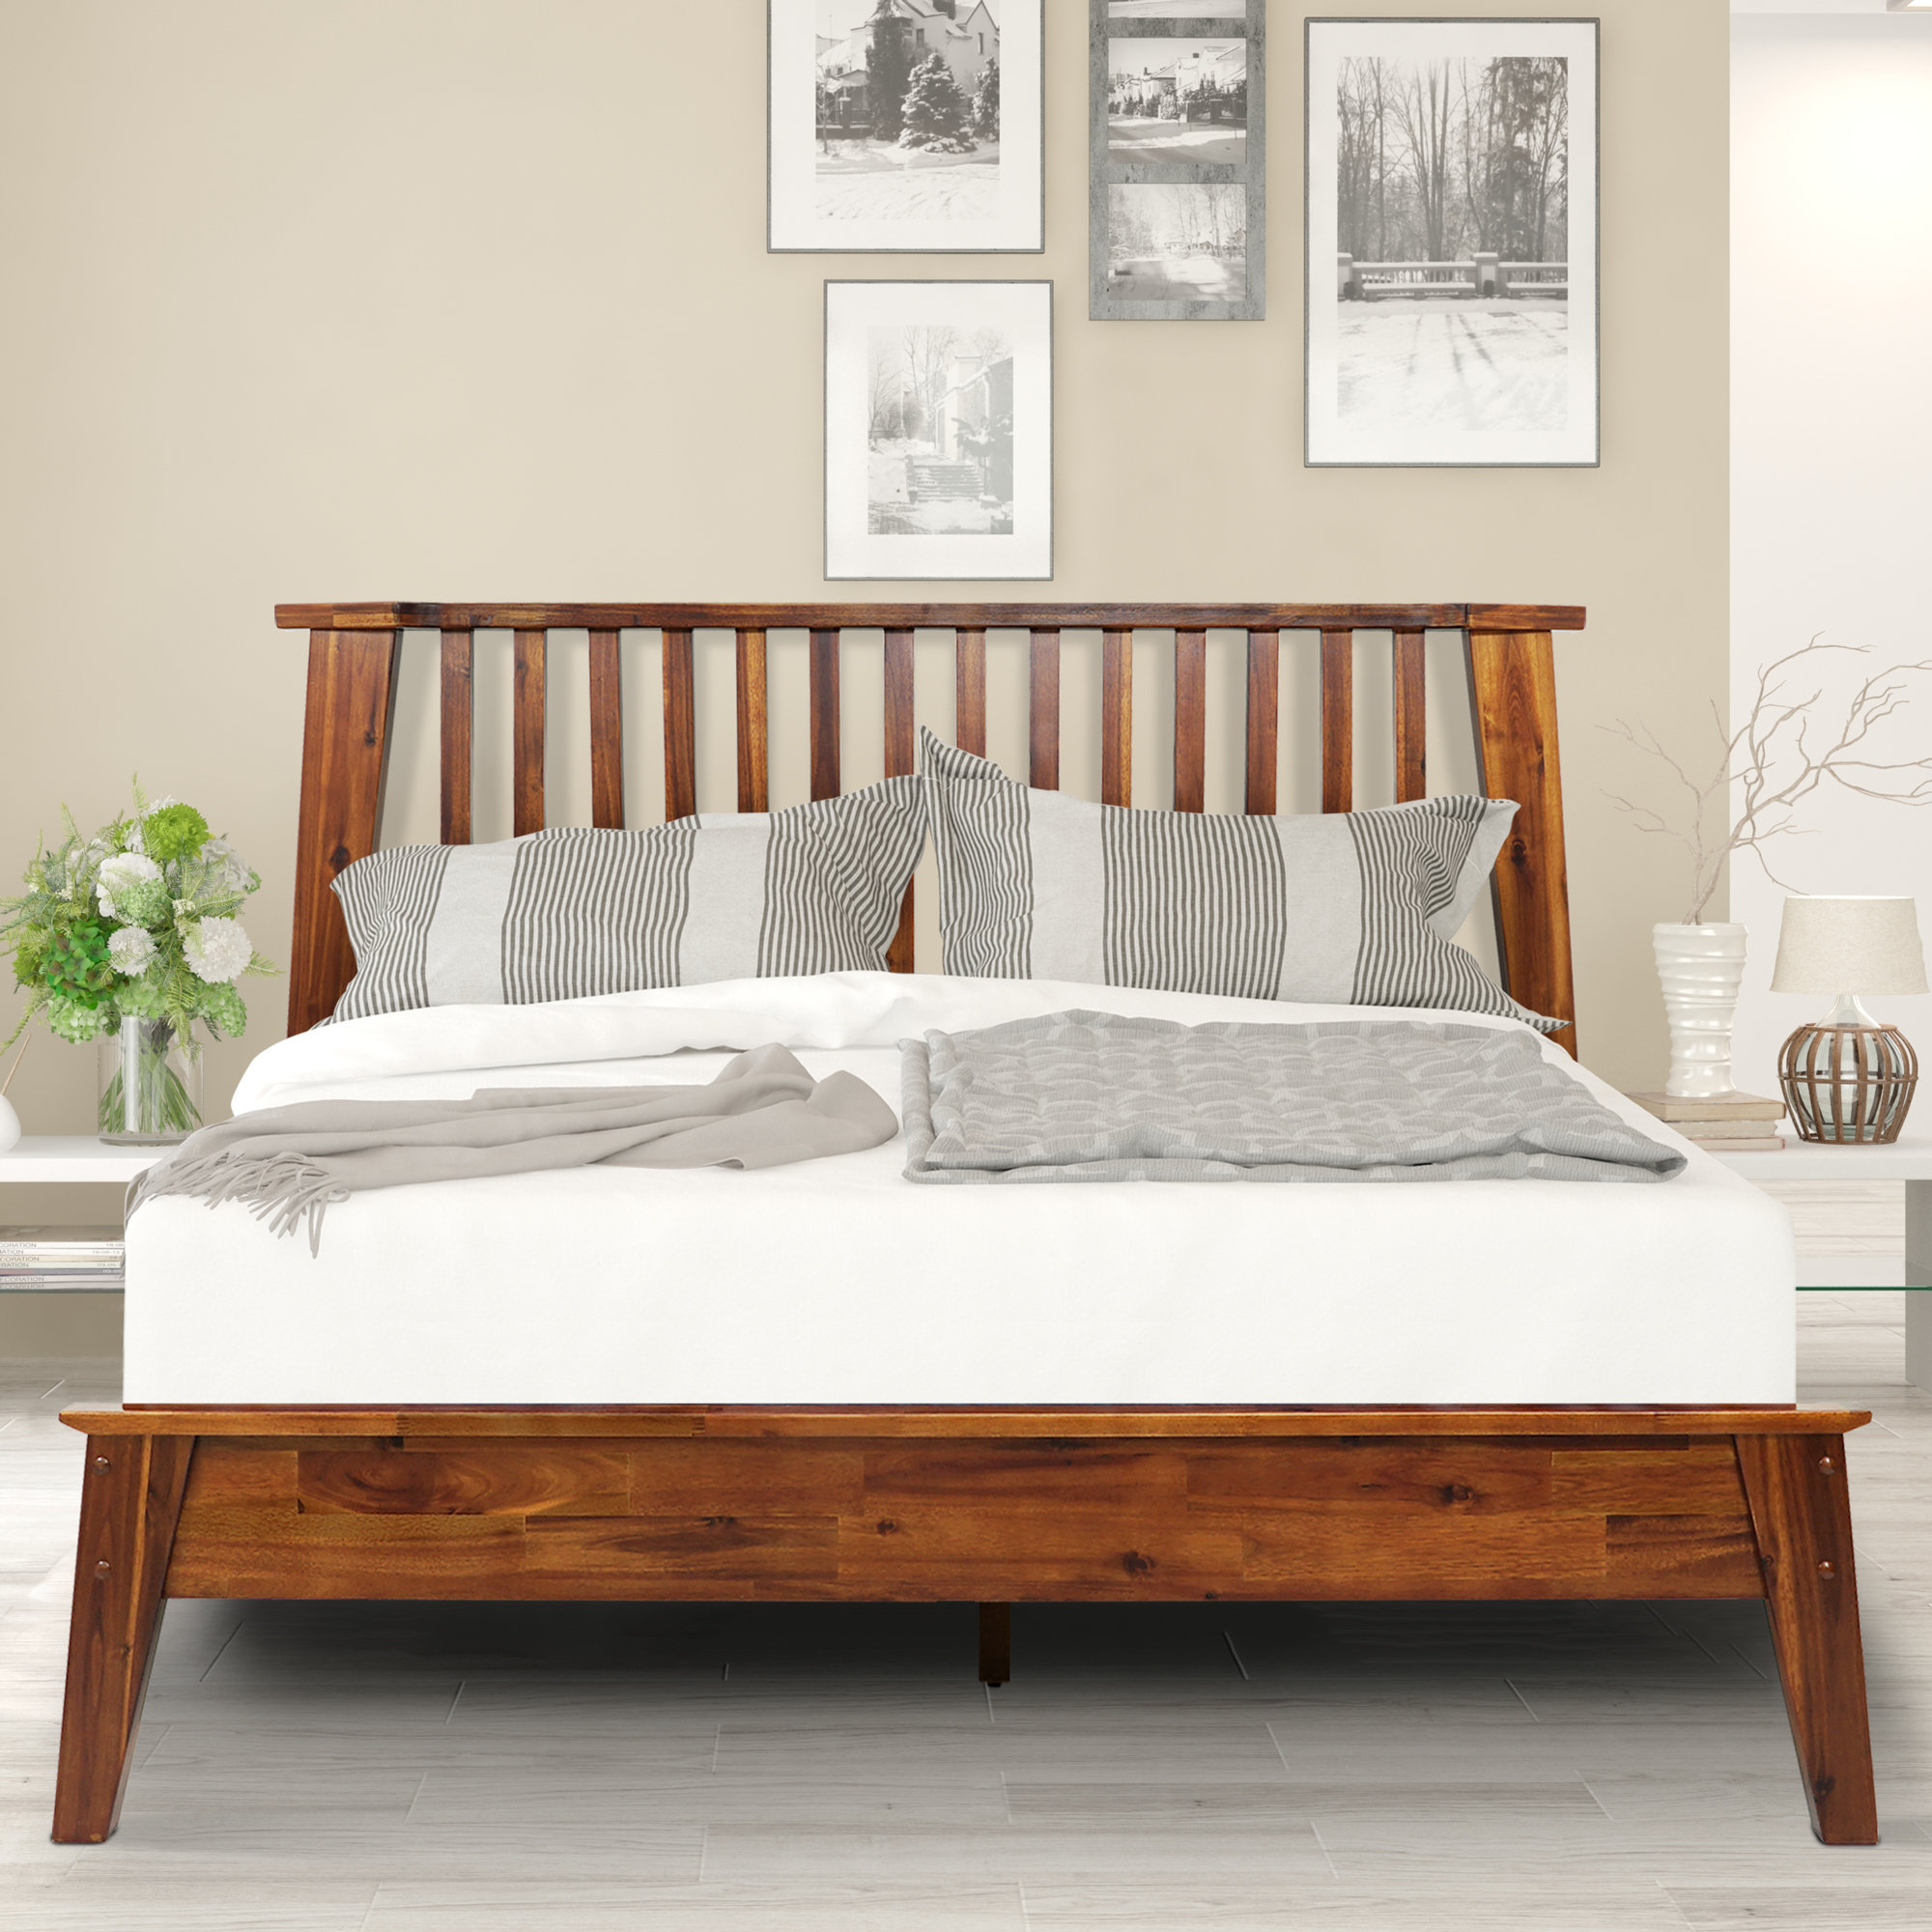 Acacia Kaylin Solid Wood Bed Frame with Headboard & Reviews